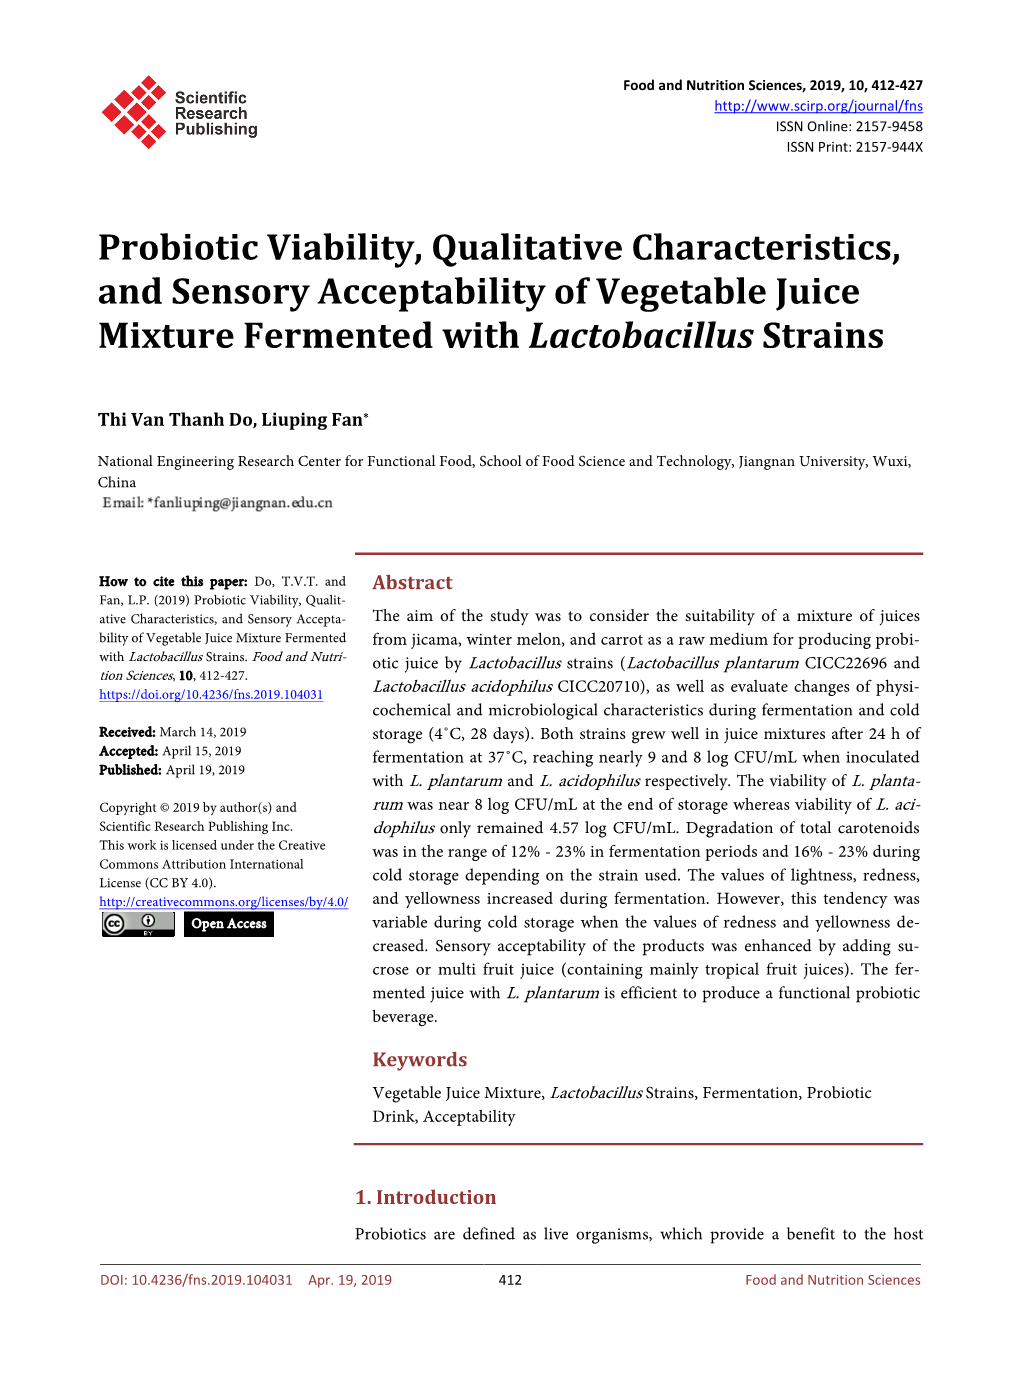 Probiotic Viability, Qualitative Characteristics, and Sensory Acceptability of Vegetable Juice Mixture Fermented with Lactobacillus Strains